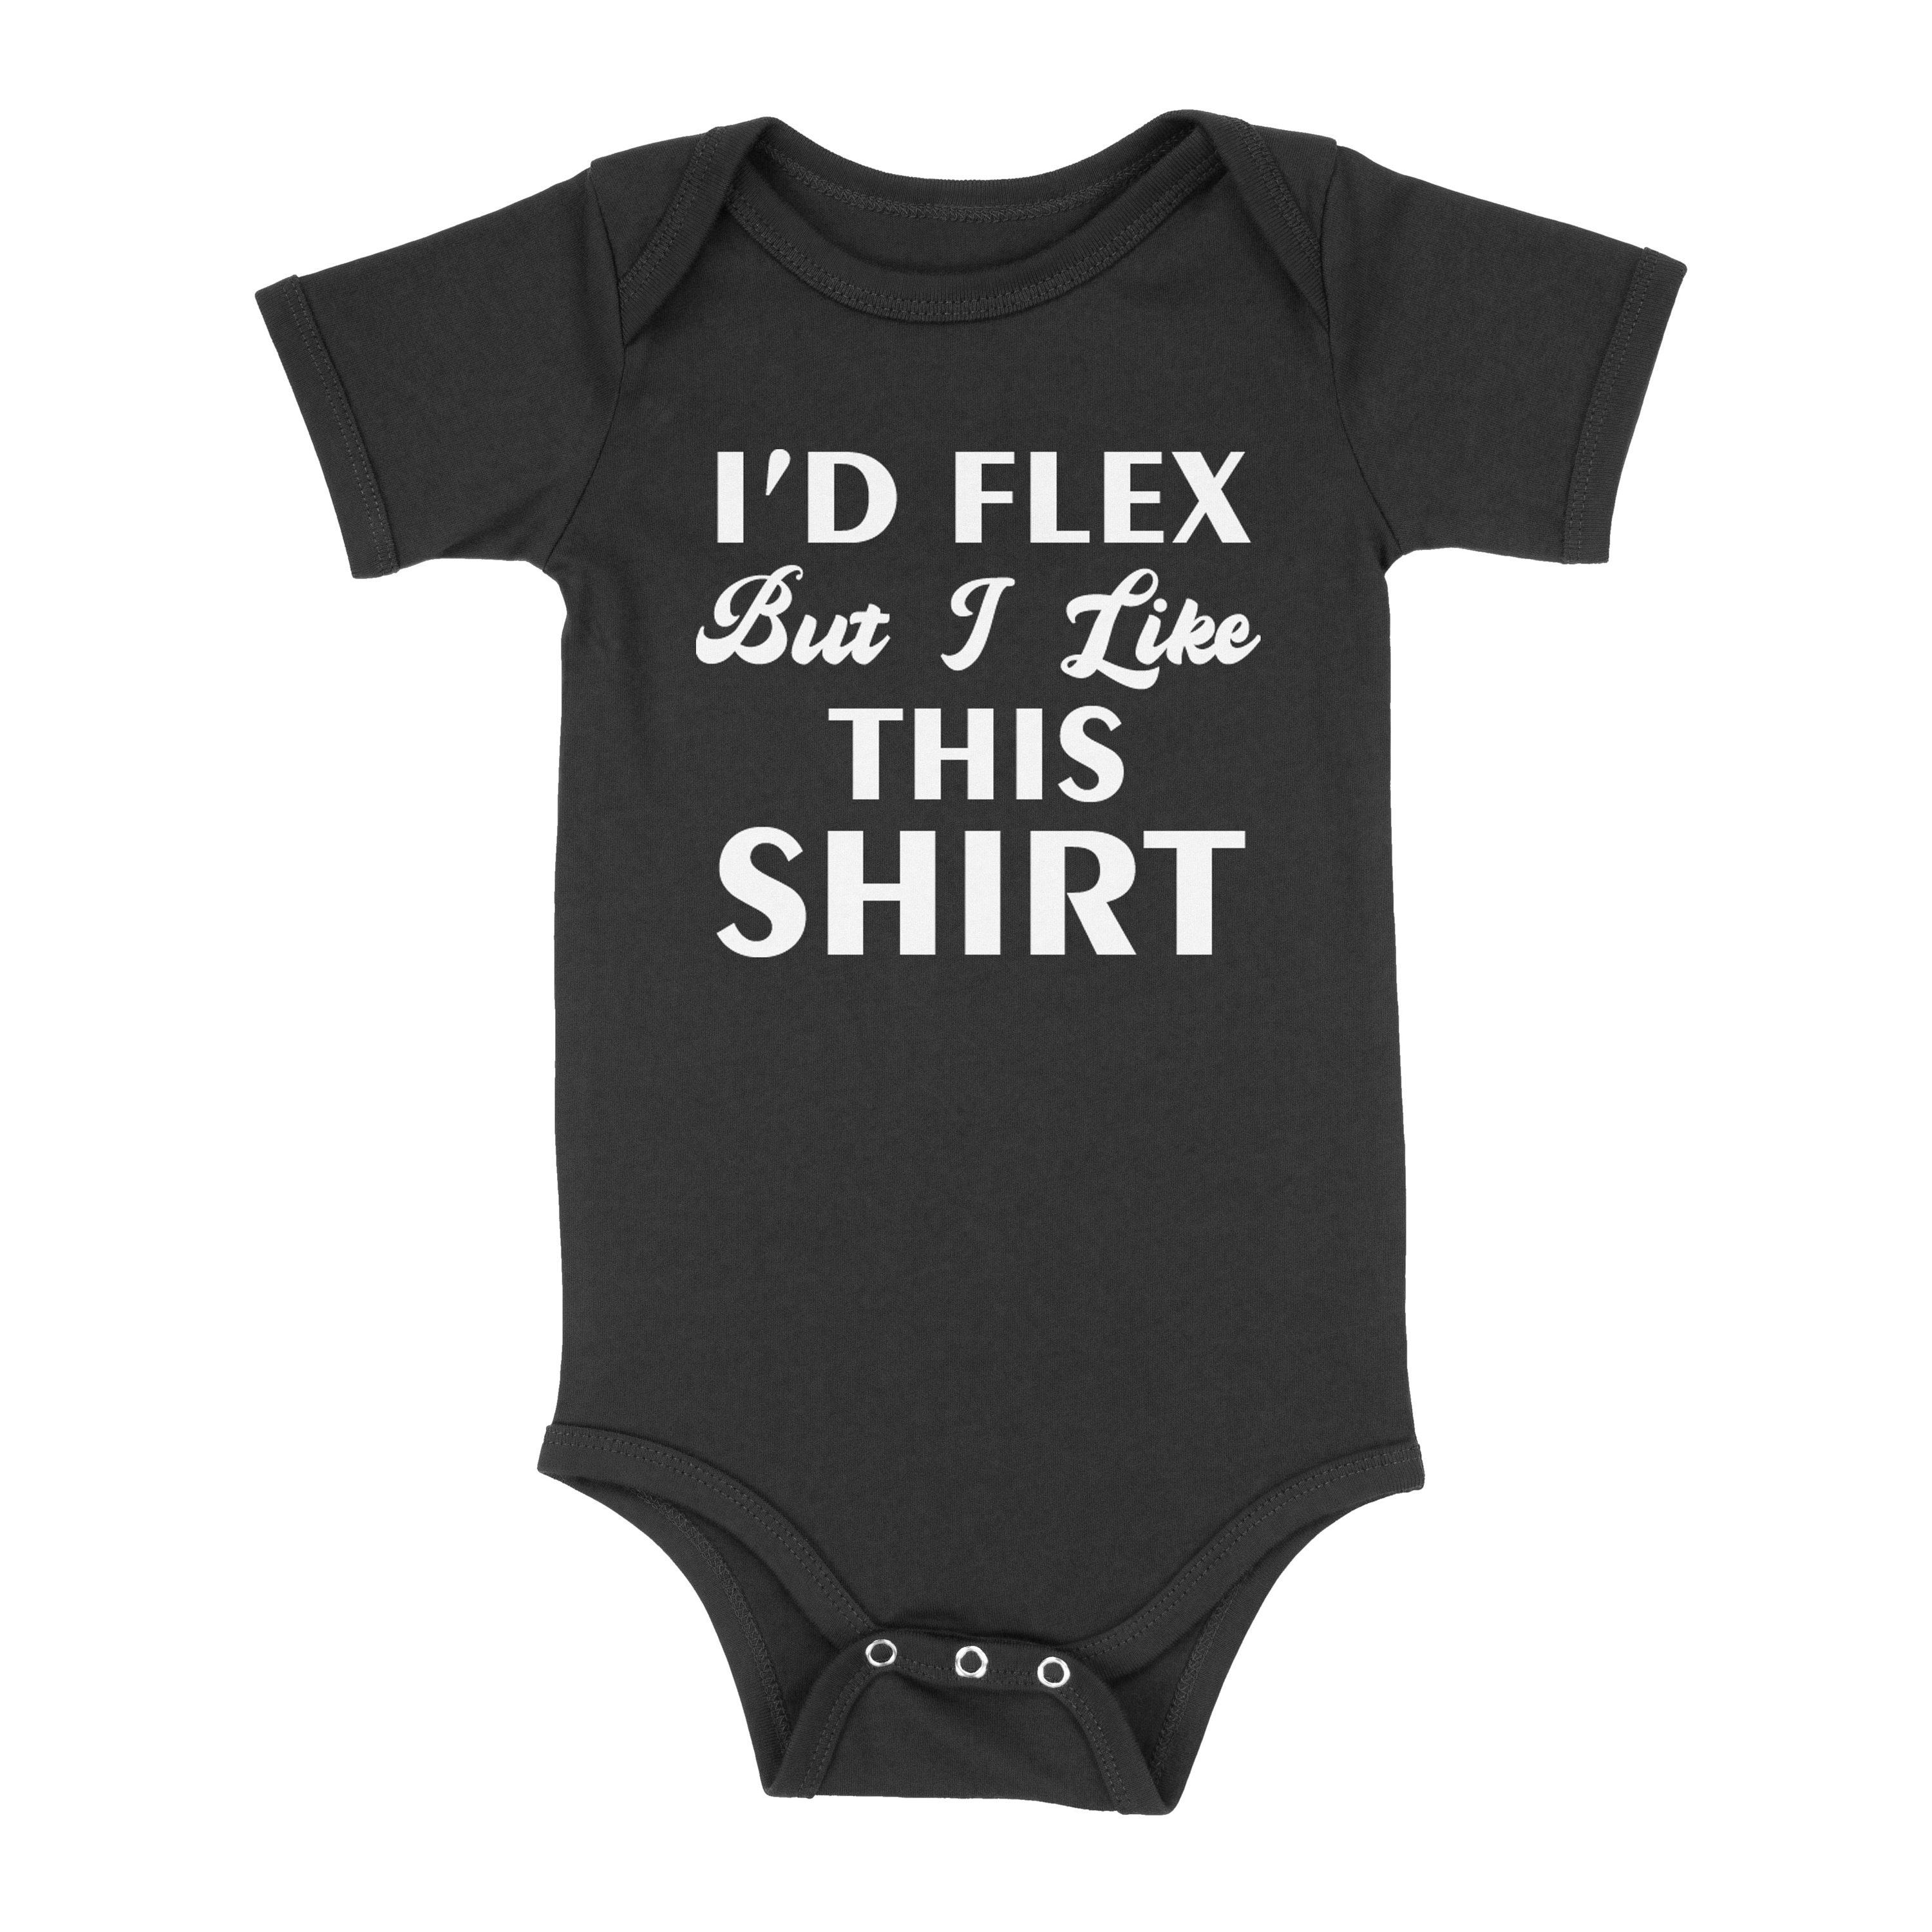 I'd Flex but I Like This Shirt Hilarious Funny Gym Pun Gains